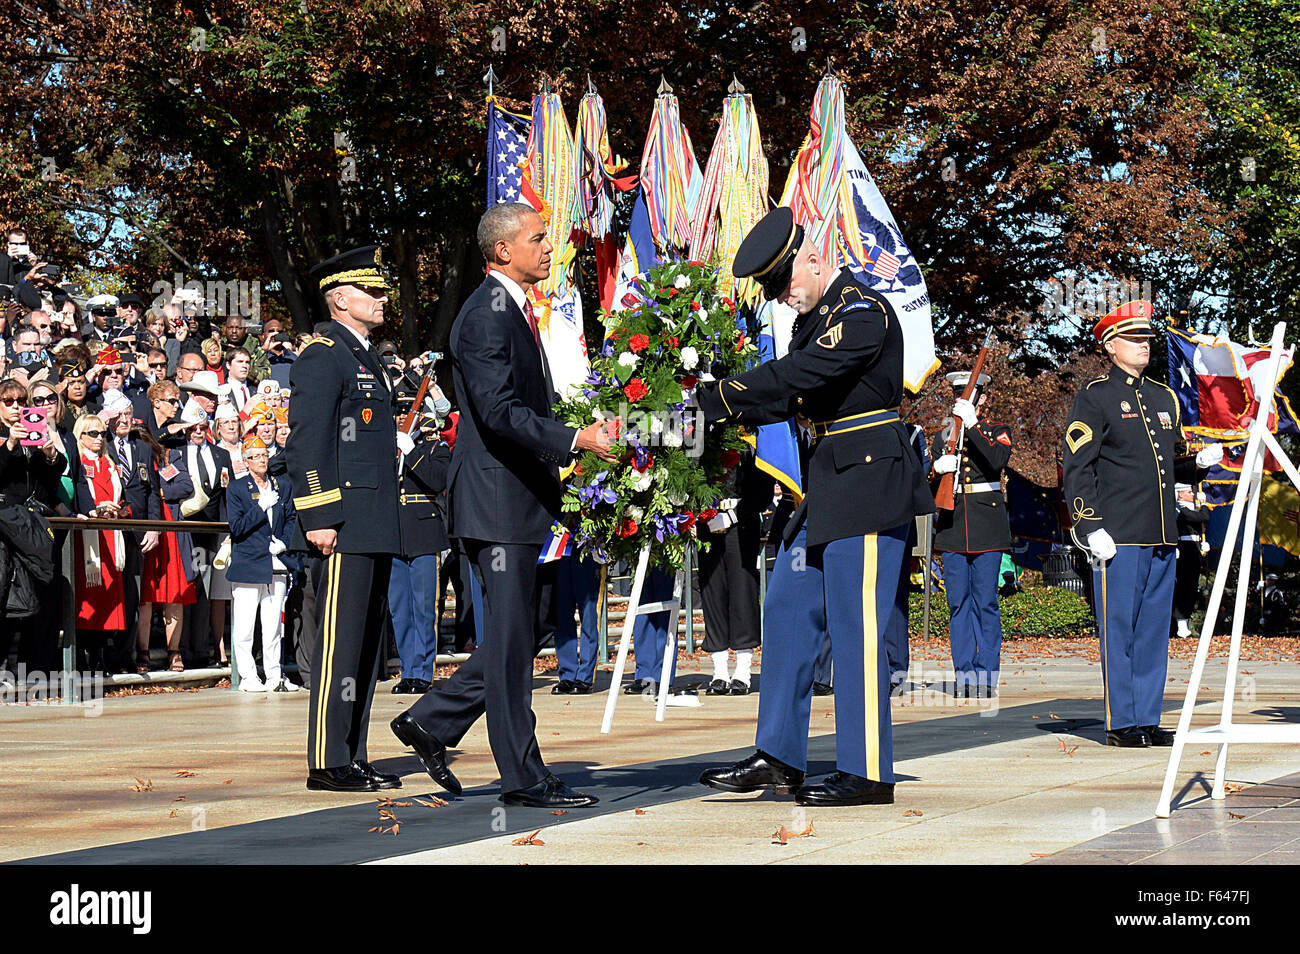 Arlington National Cemetery, USA. 11th November, 2015. U.S. President Barack Obama places a wreath in honor of Veterans Day at Arlington National Cemetery November 11, 2015 in Arlington, Virginia. Stock Photo